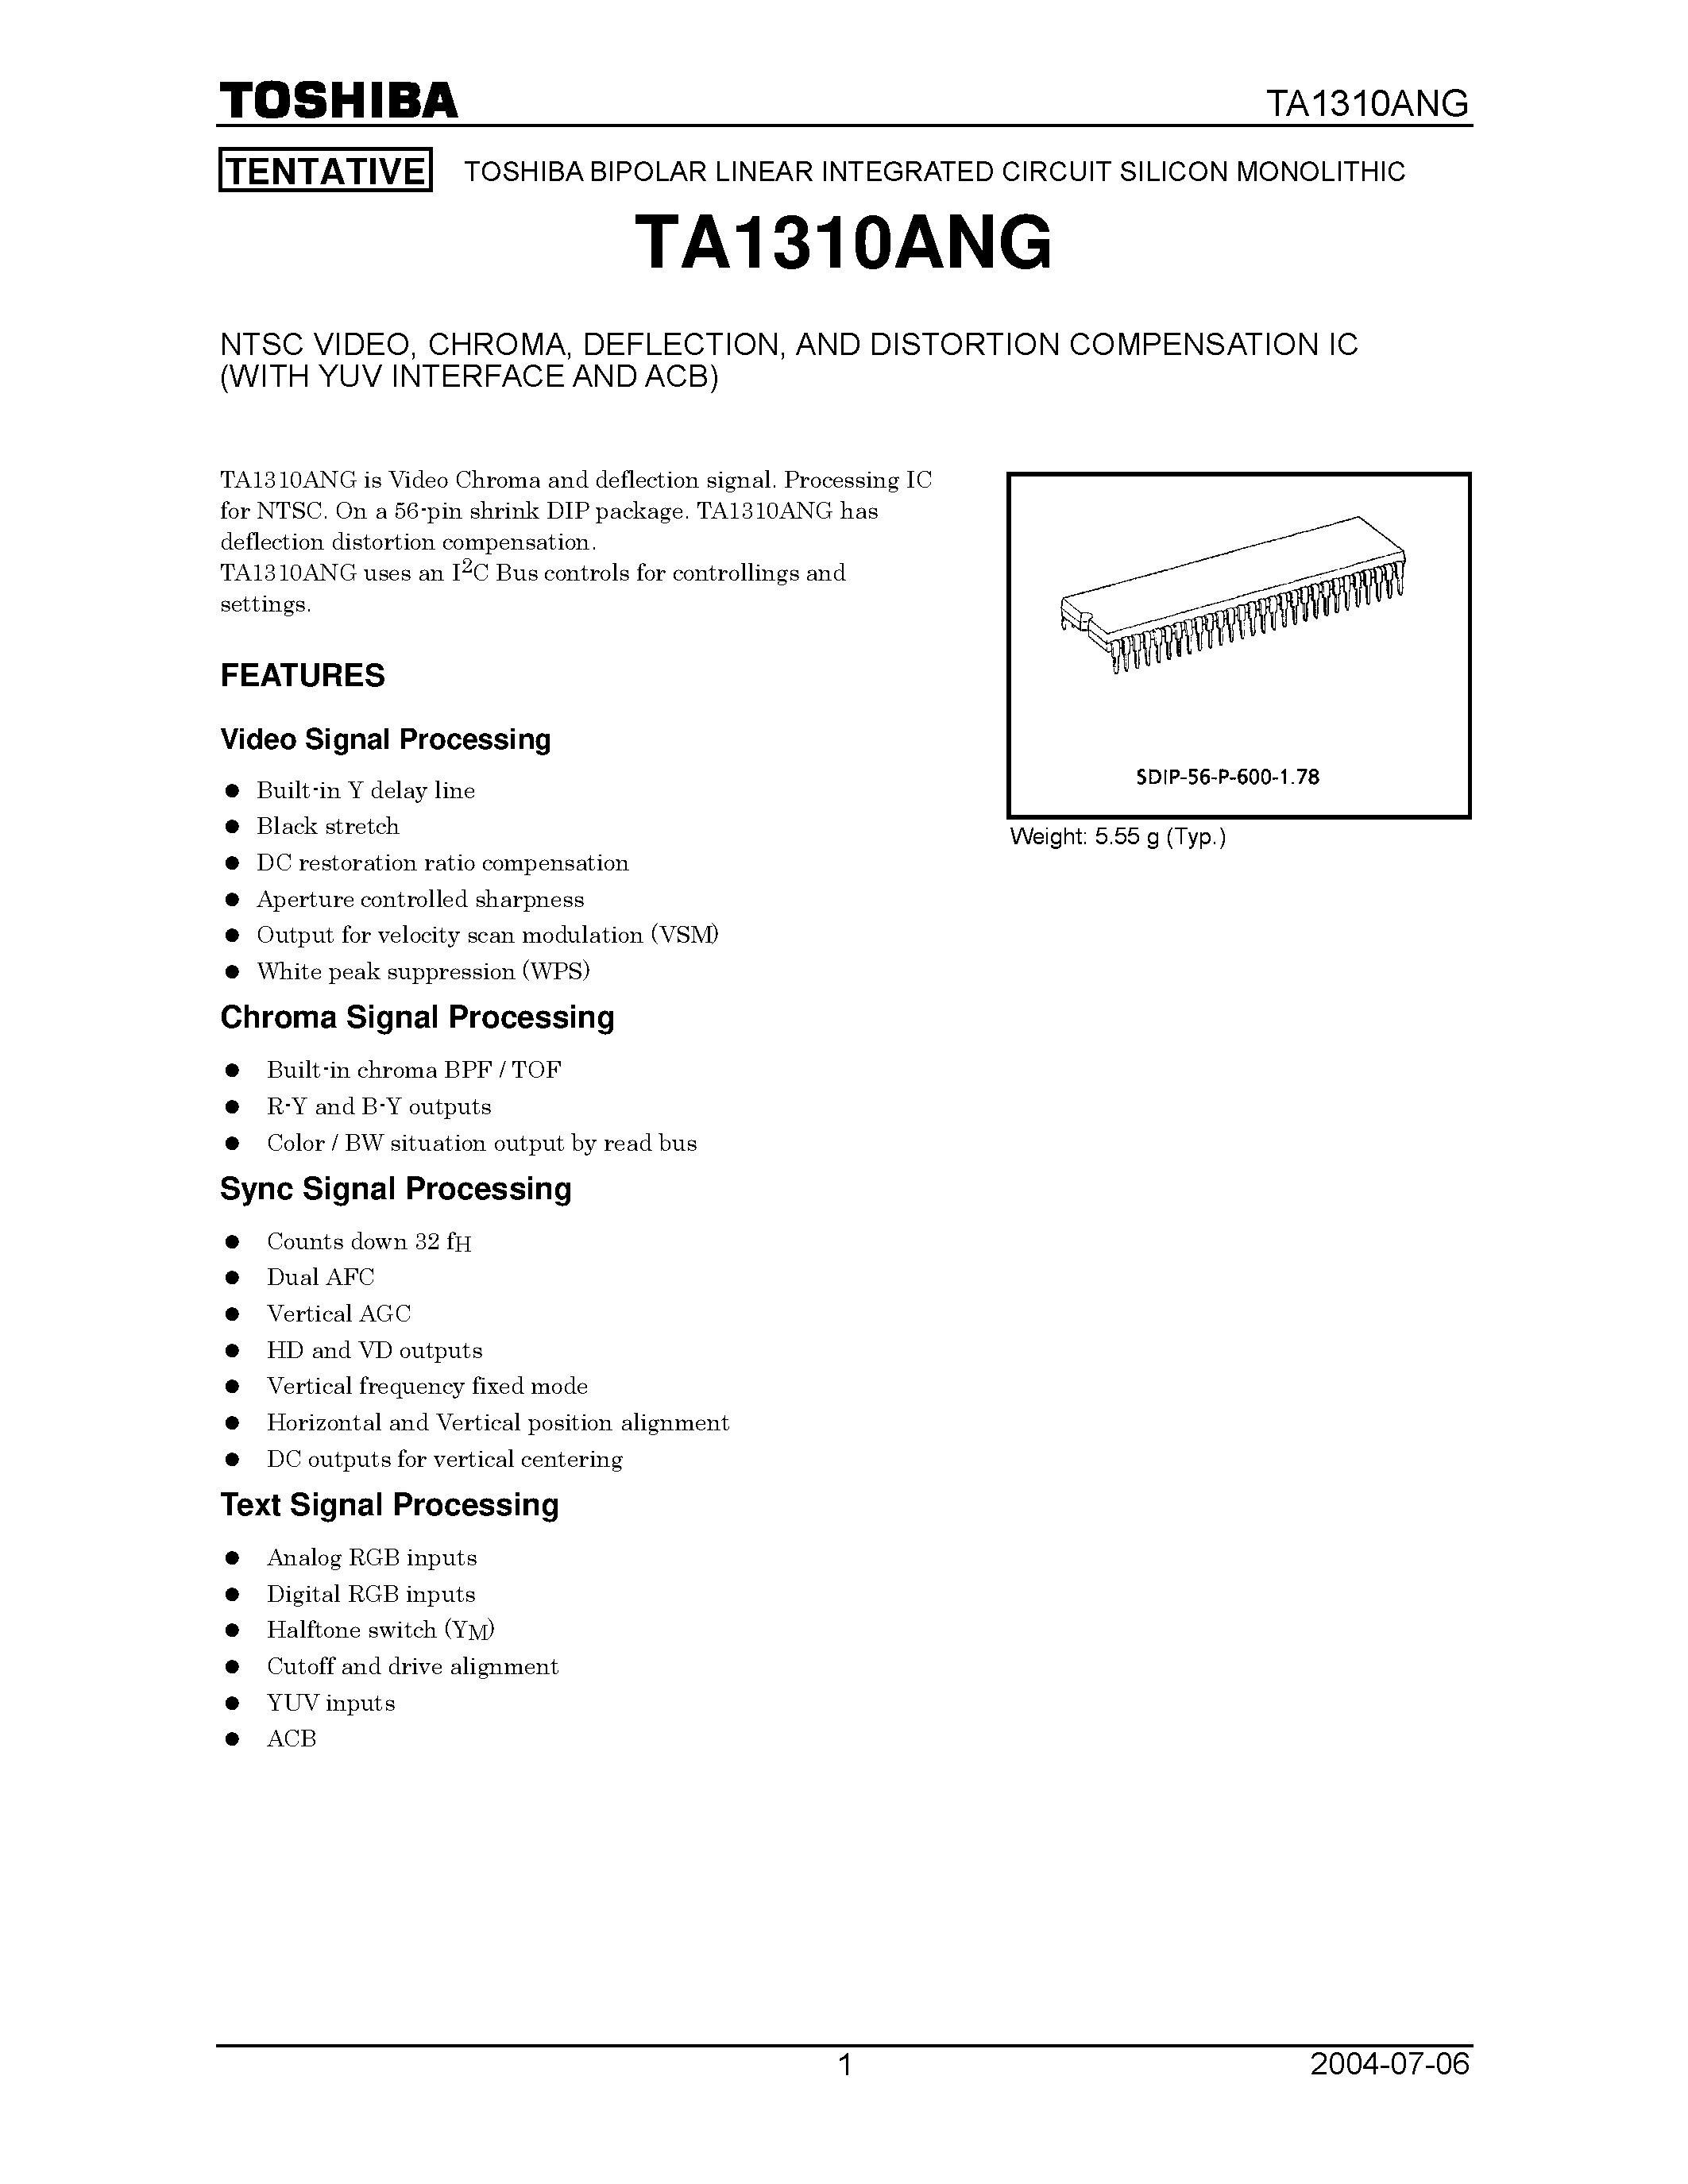 Datasheet TA1310ANG - NTSC Video / Chroma / Deflection and Distorition Compensation IC page 1